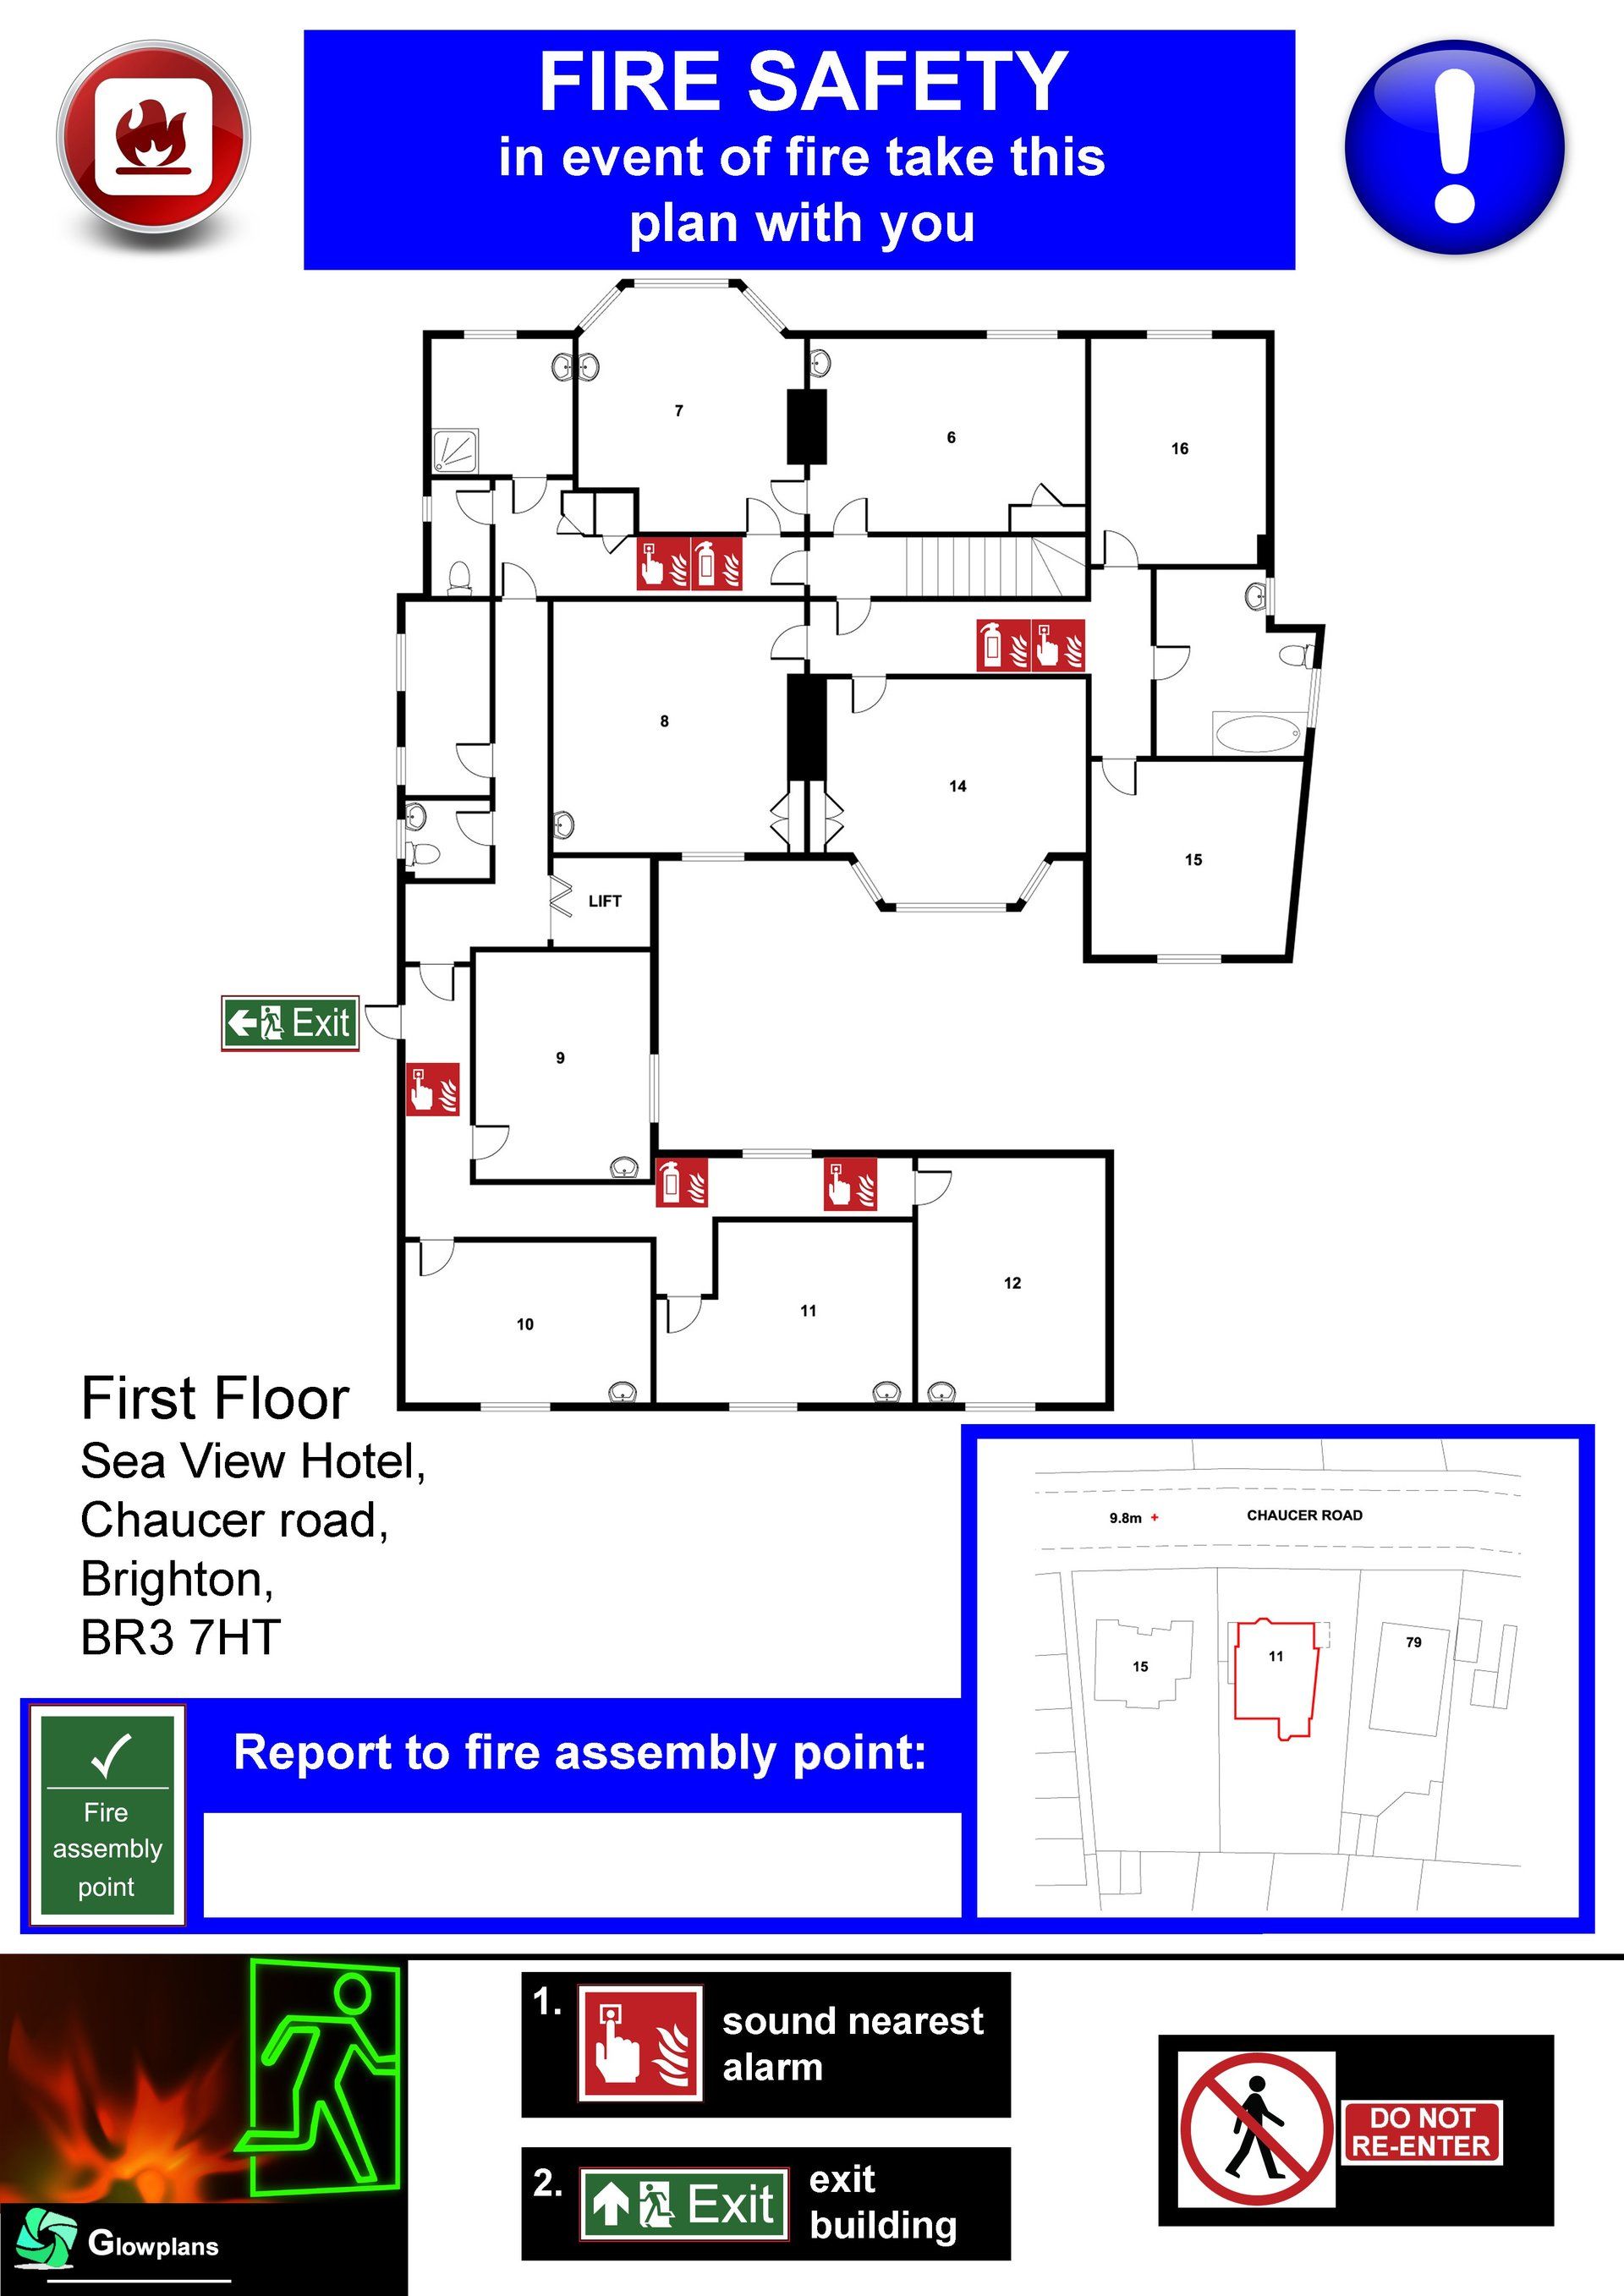 Building safety plans, floorplans for business fire escape